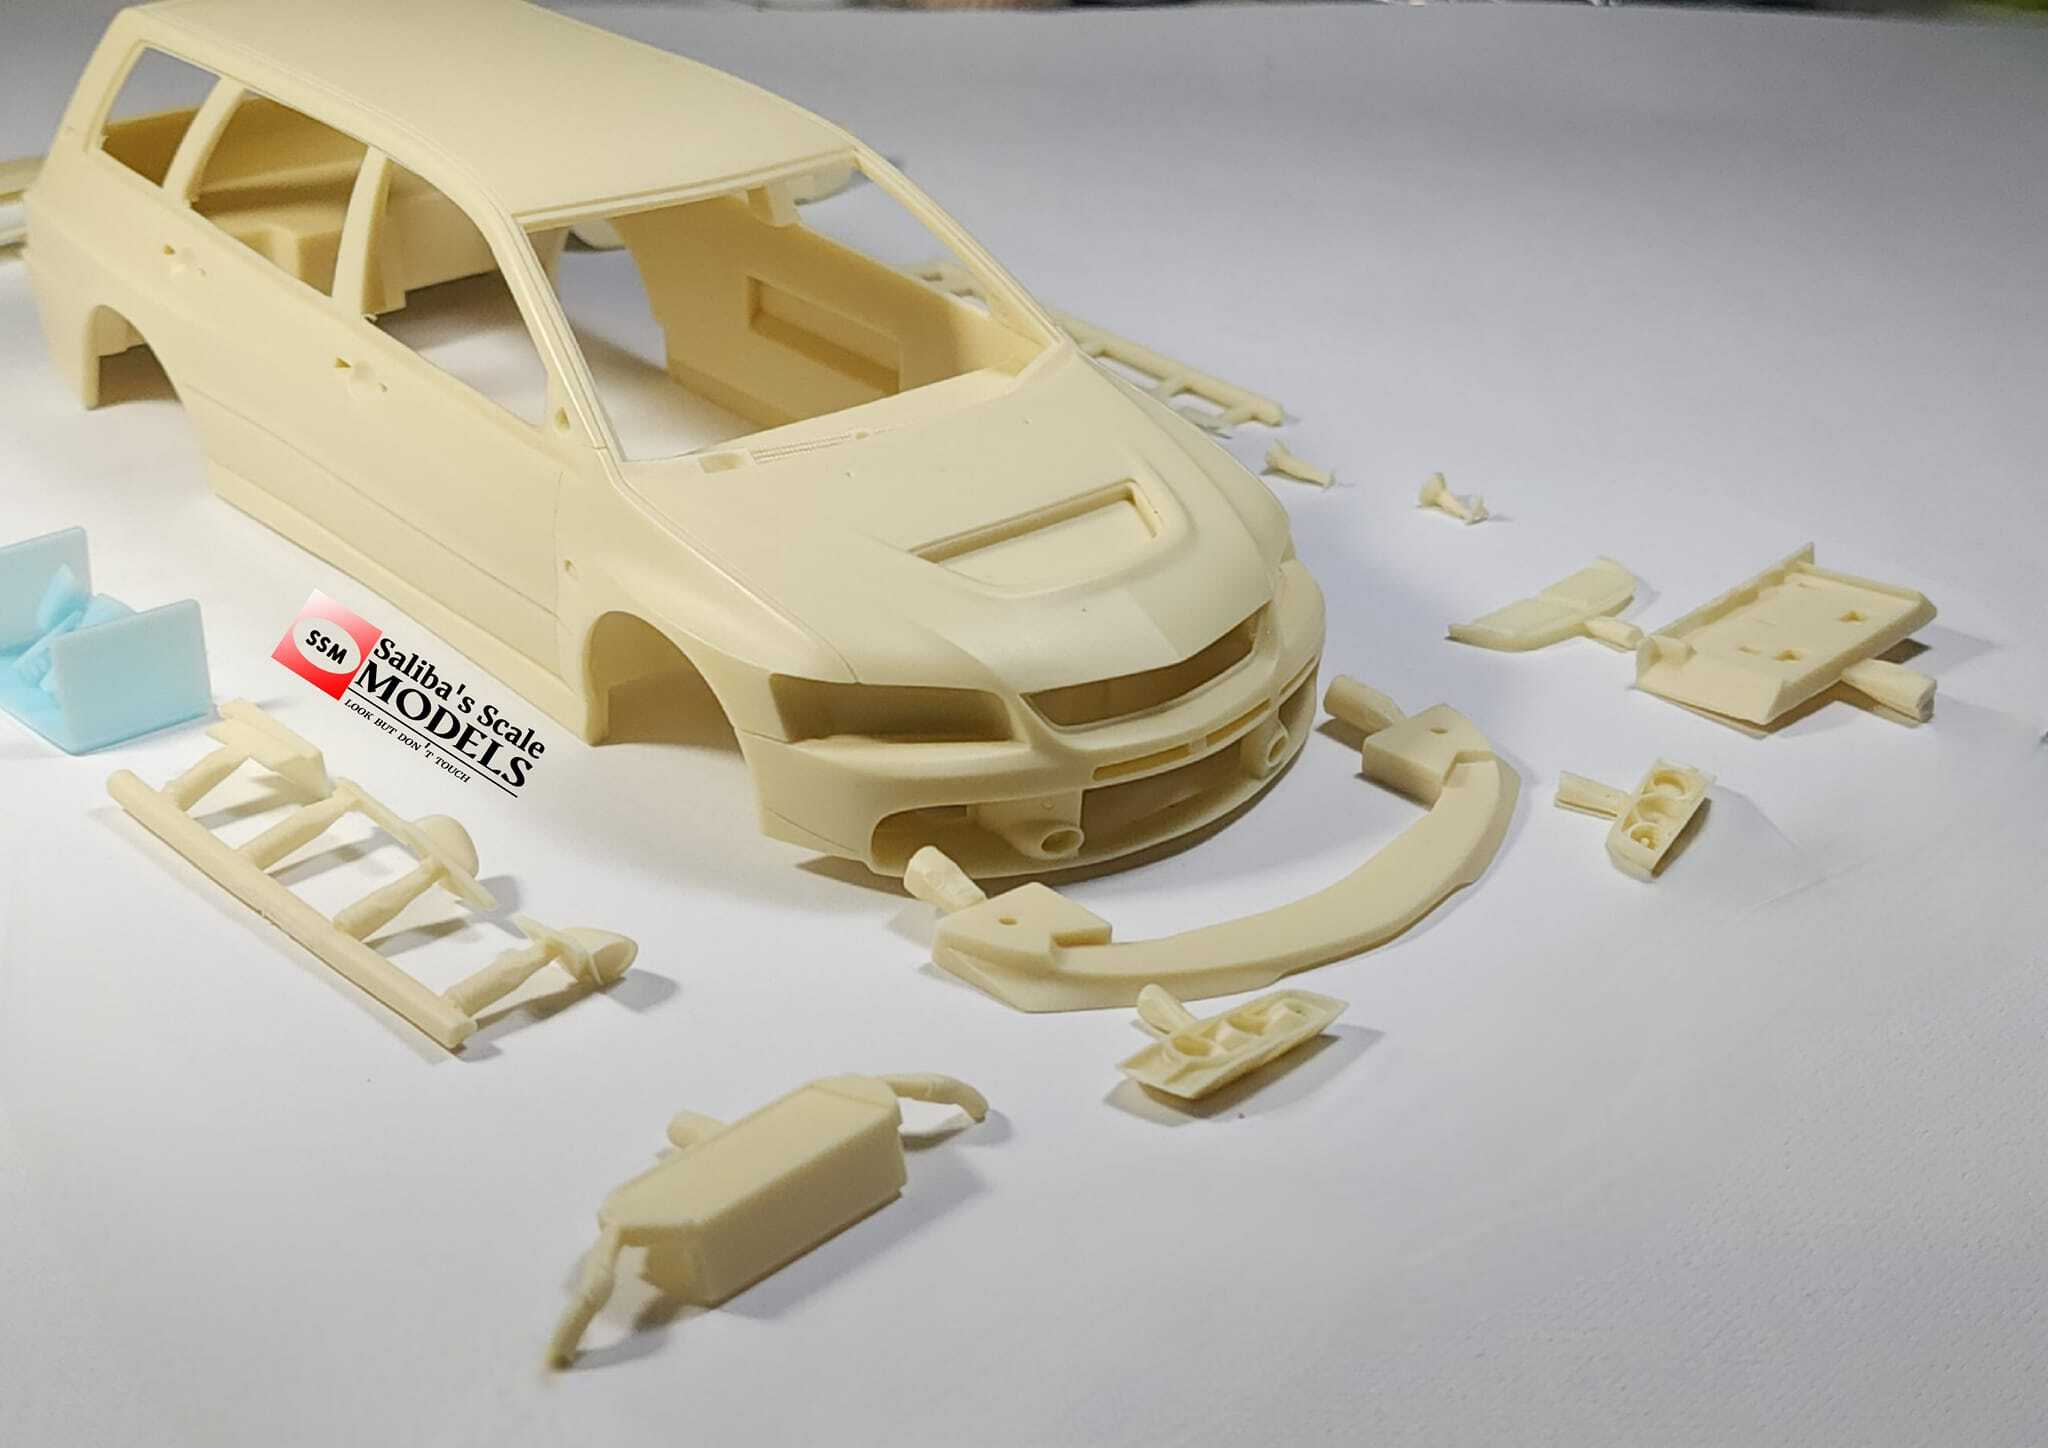  1/24 scale model car kits,1/24 model car kits,1/24 resin model car kits